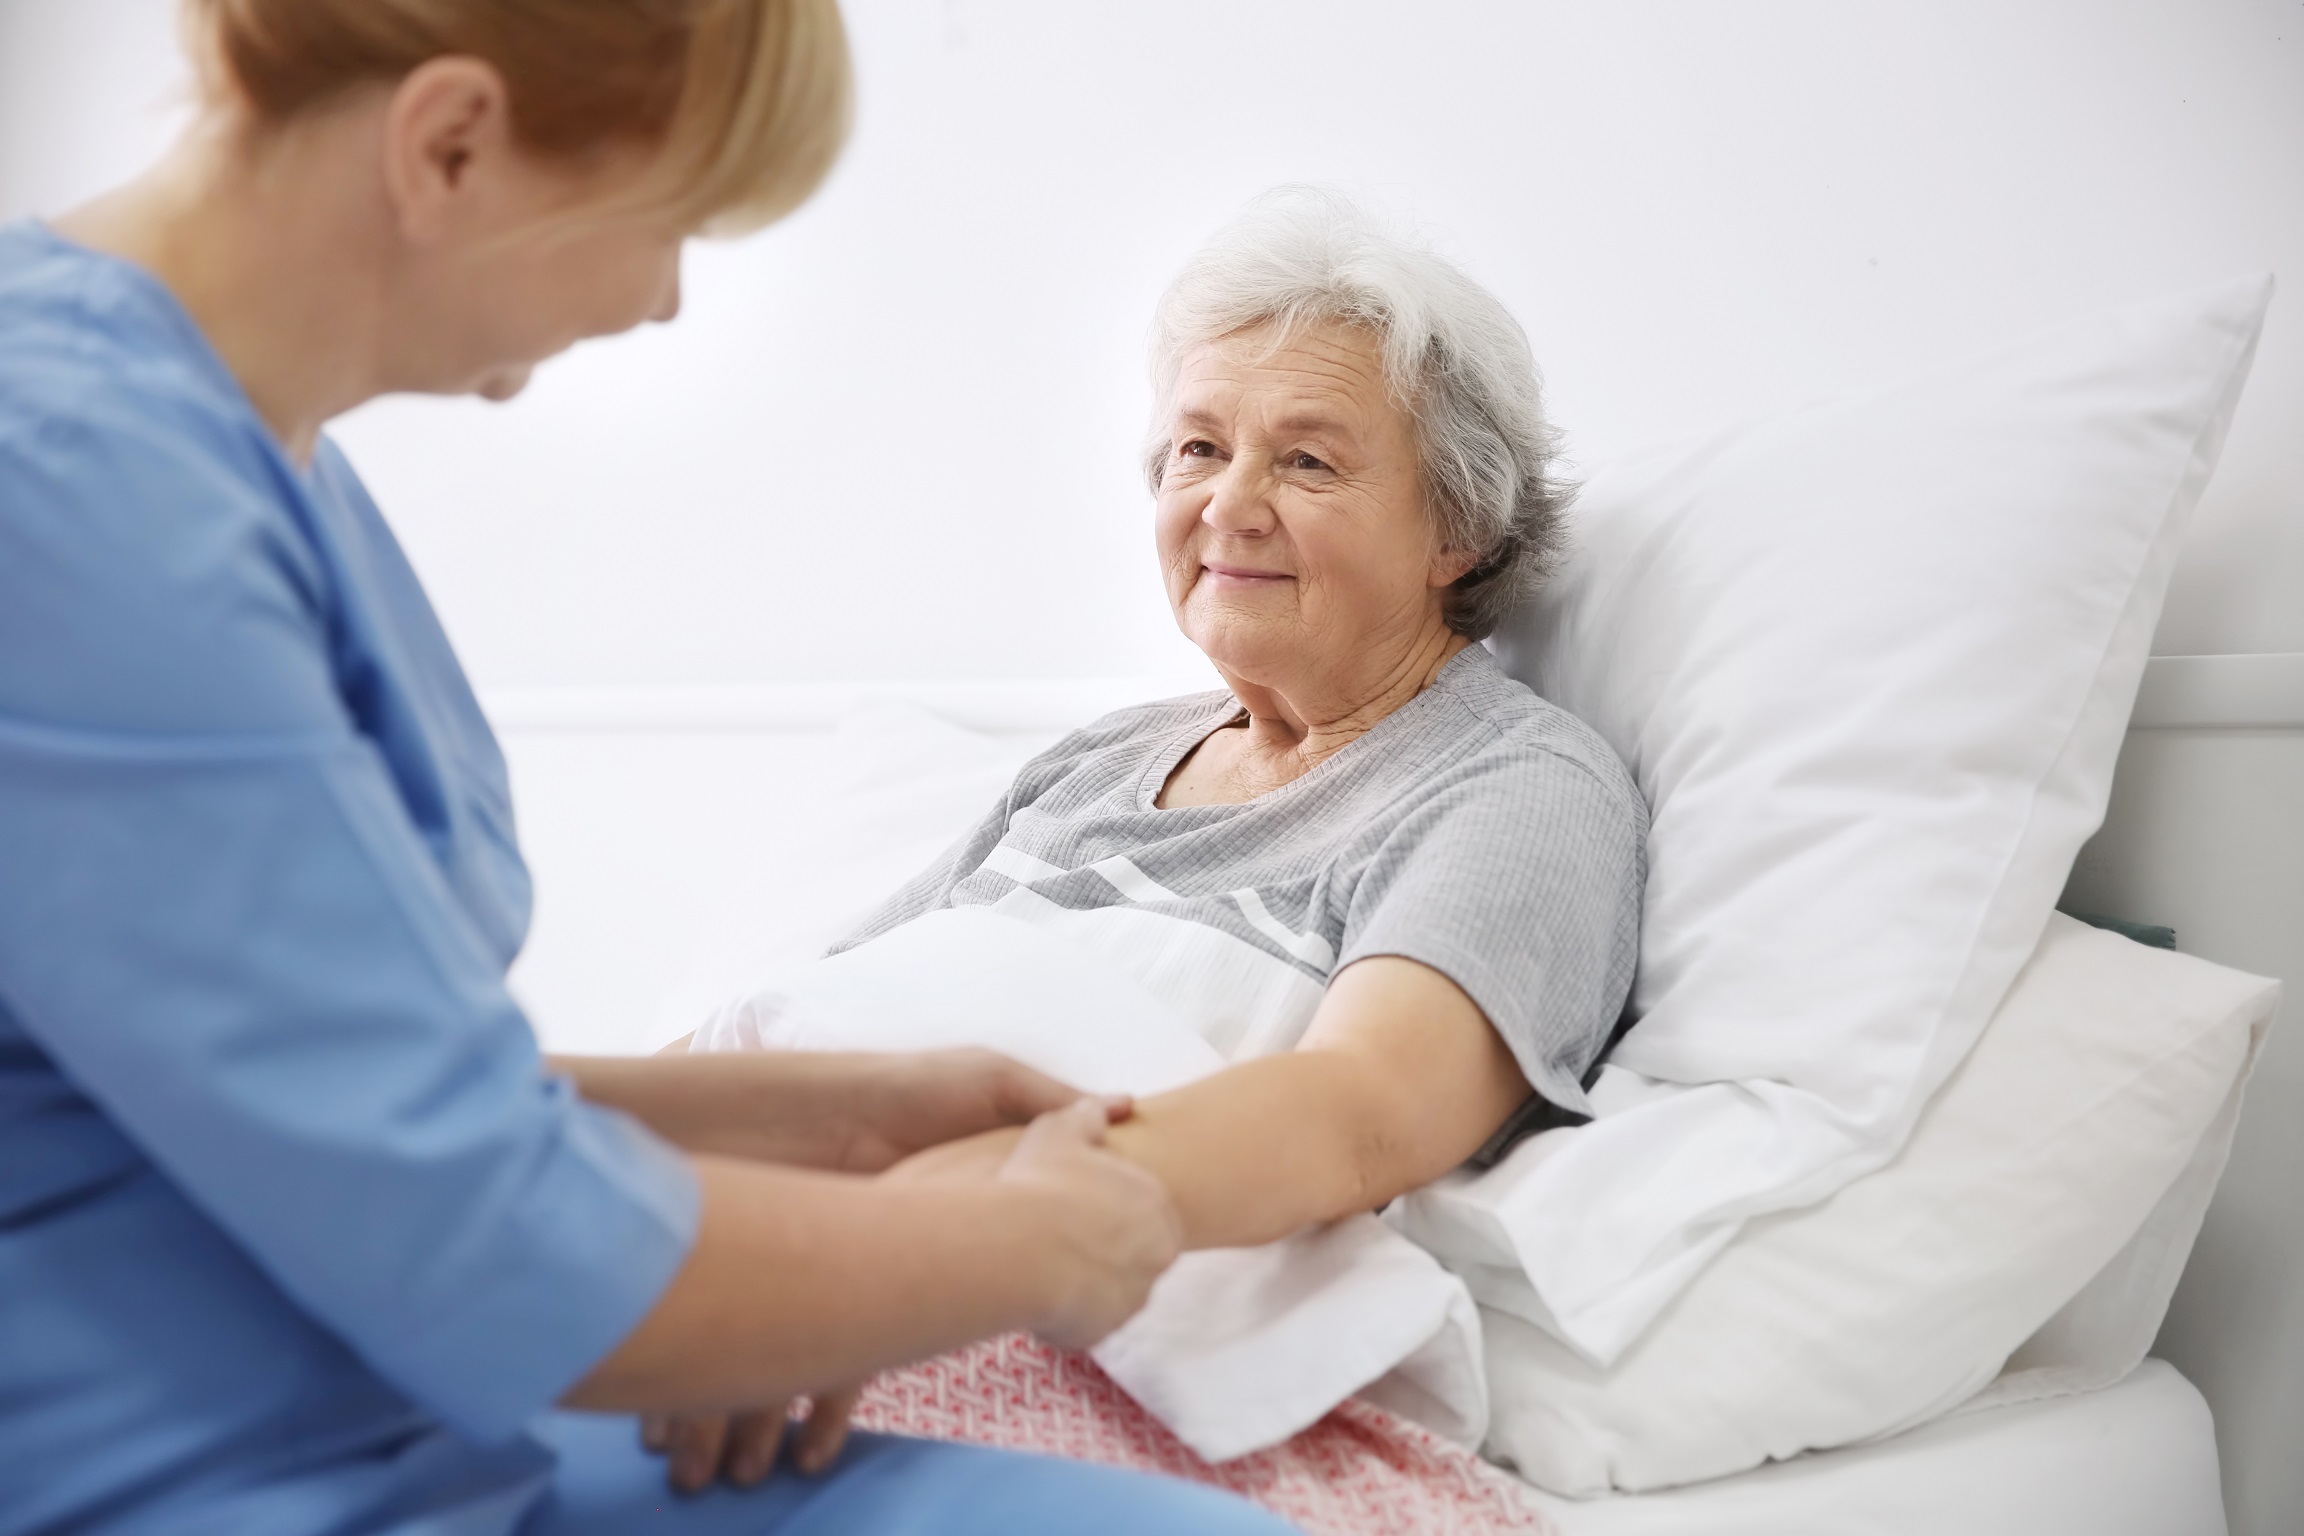 Nurse massaging the arm of an older patient